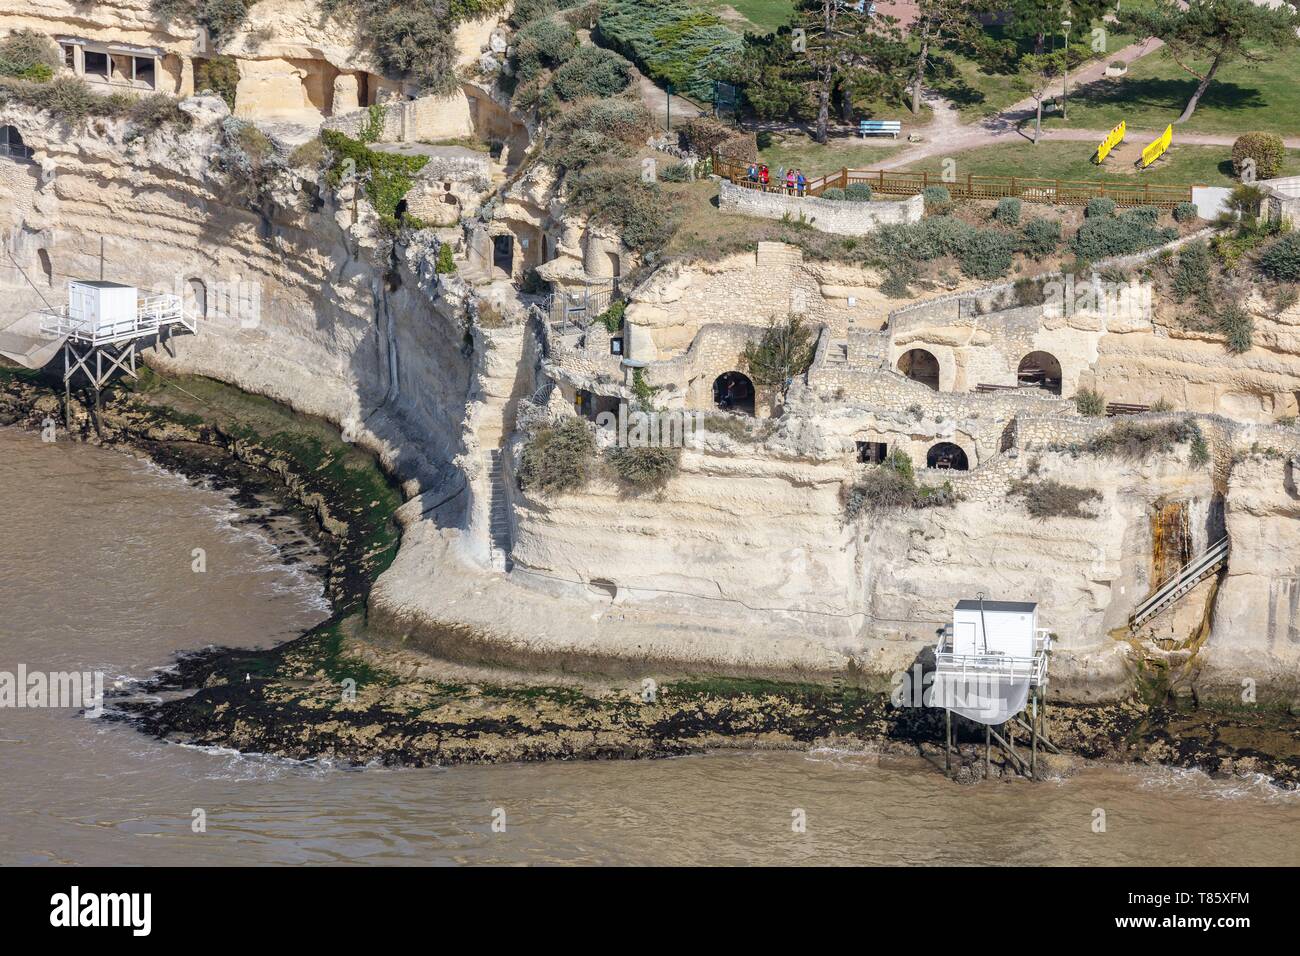 Francia, Charente Maritime, Meschers sur Gironde, metropolitana case in scogliera (vista aerea) Foto Stock